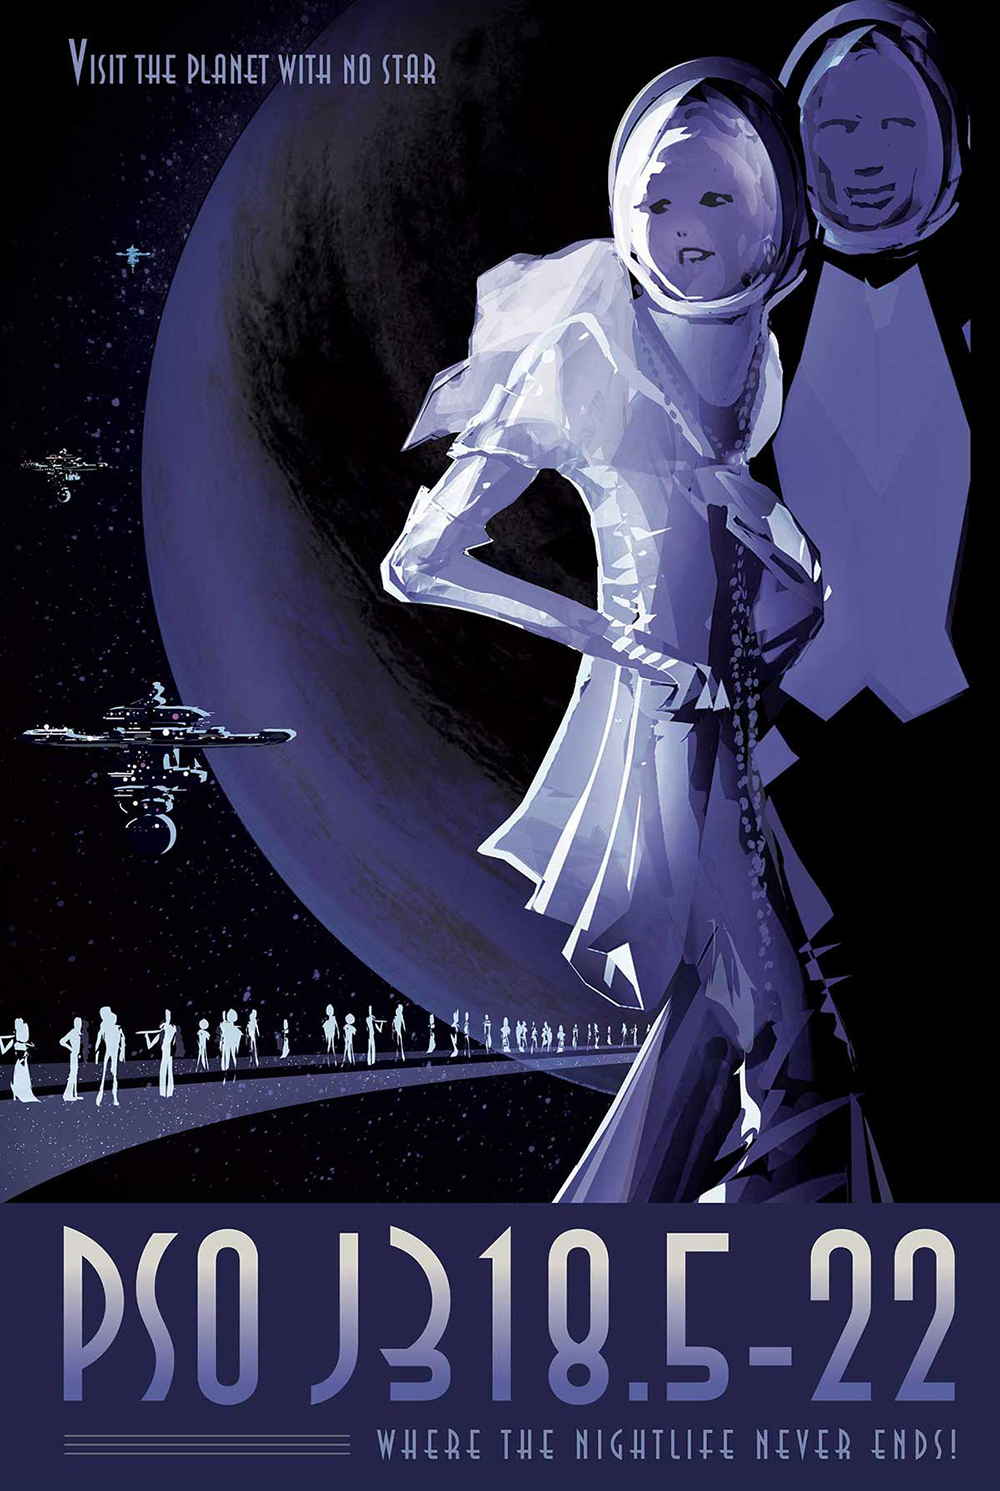 Tasarim - Grafik Tasarim - Vintage - Poster - Nasa - Uzay Seyahati - JPL - Space Travel